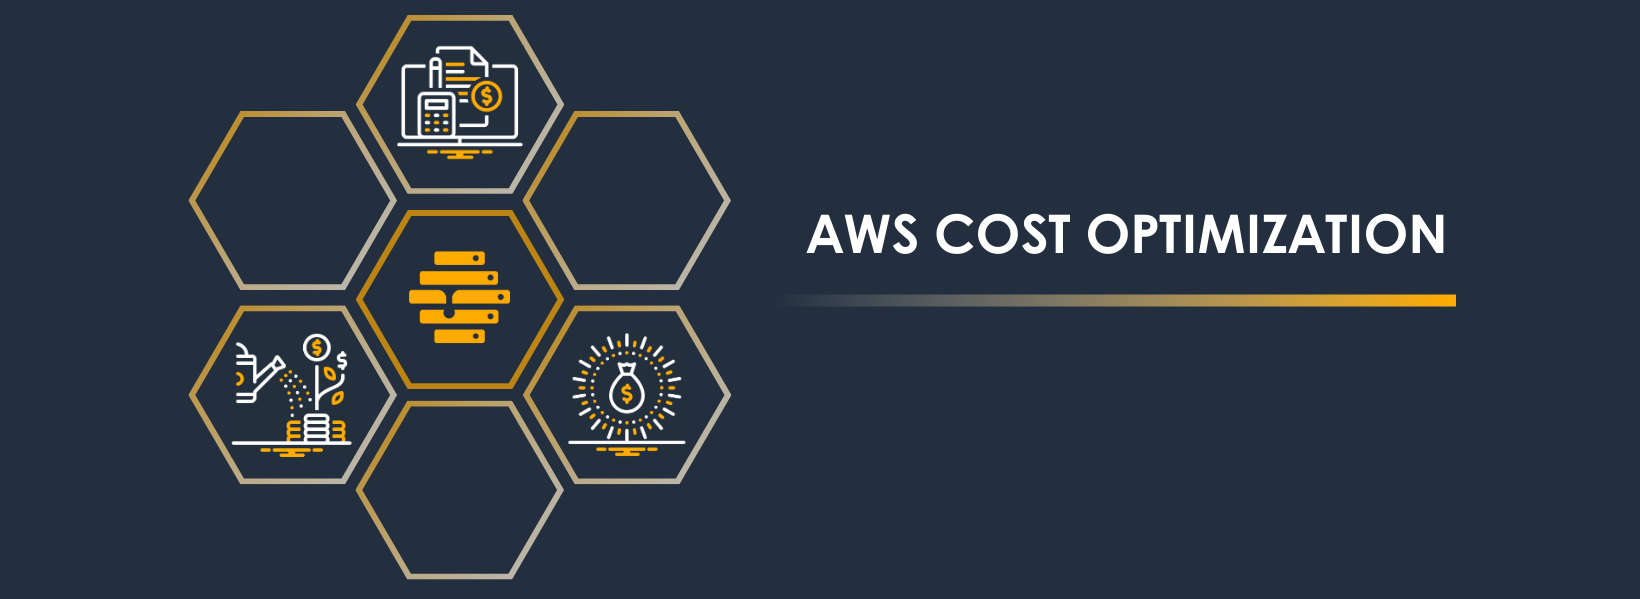 AWS Cost Optimization